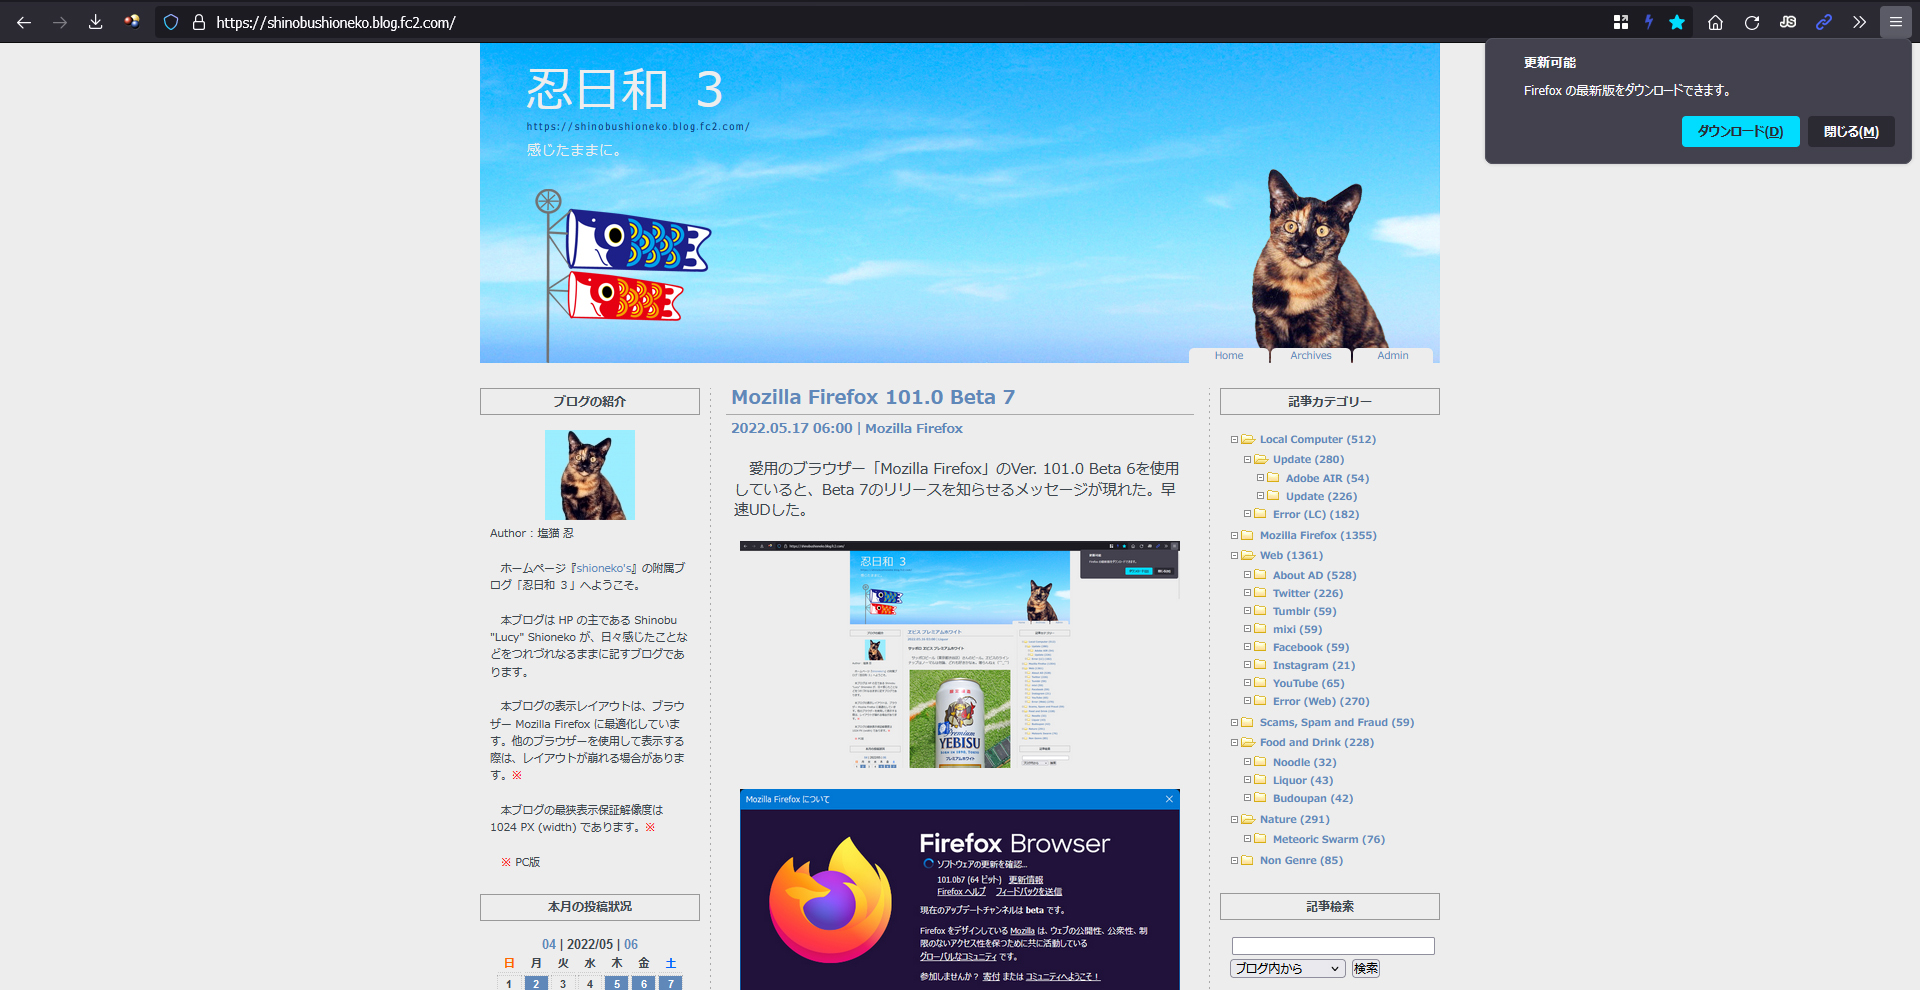 Mozilla Firefox 101.0 Beta 9